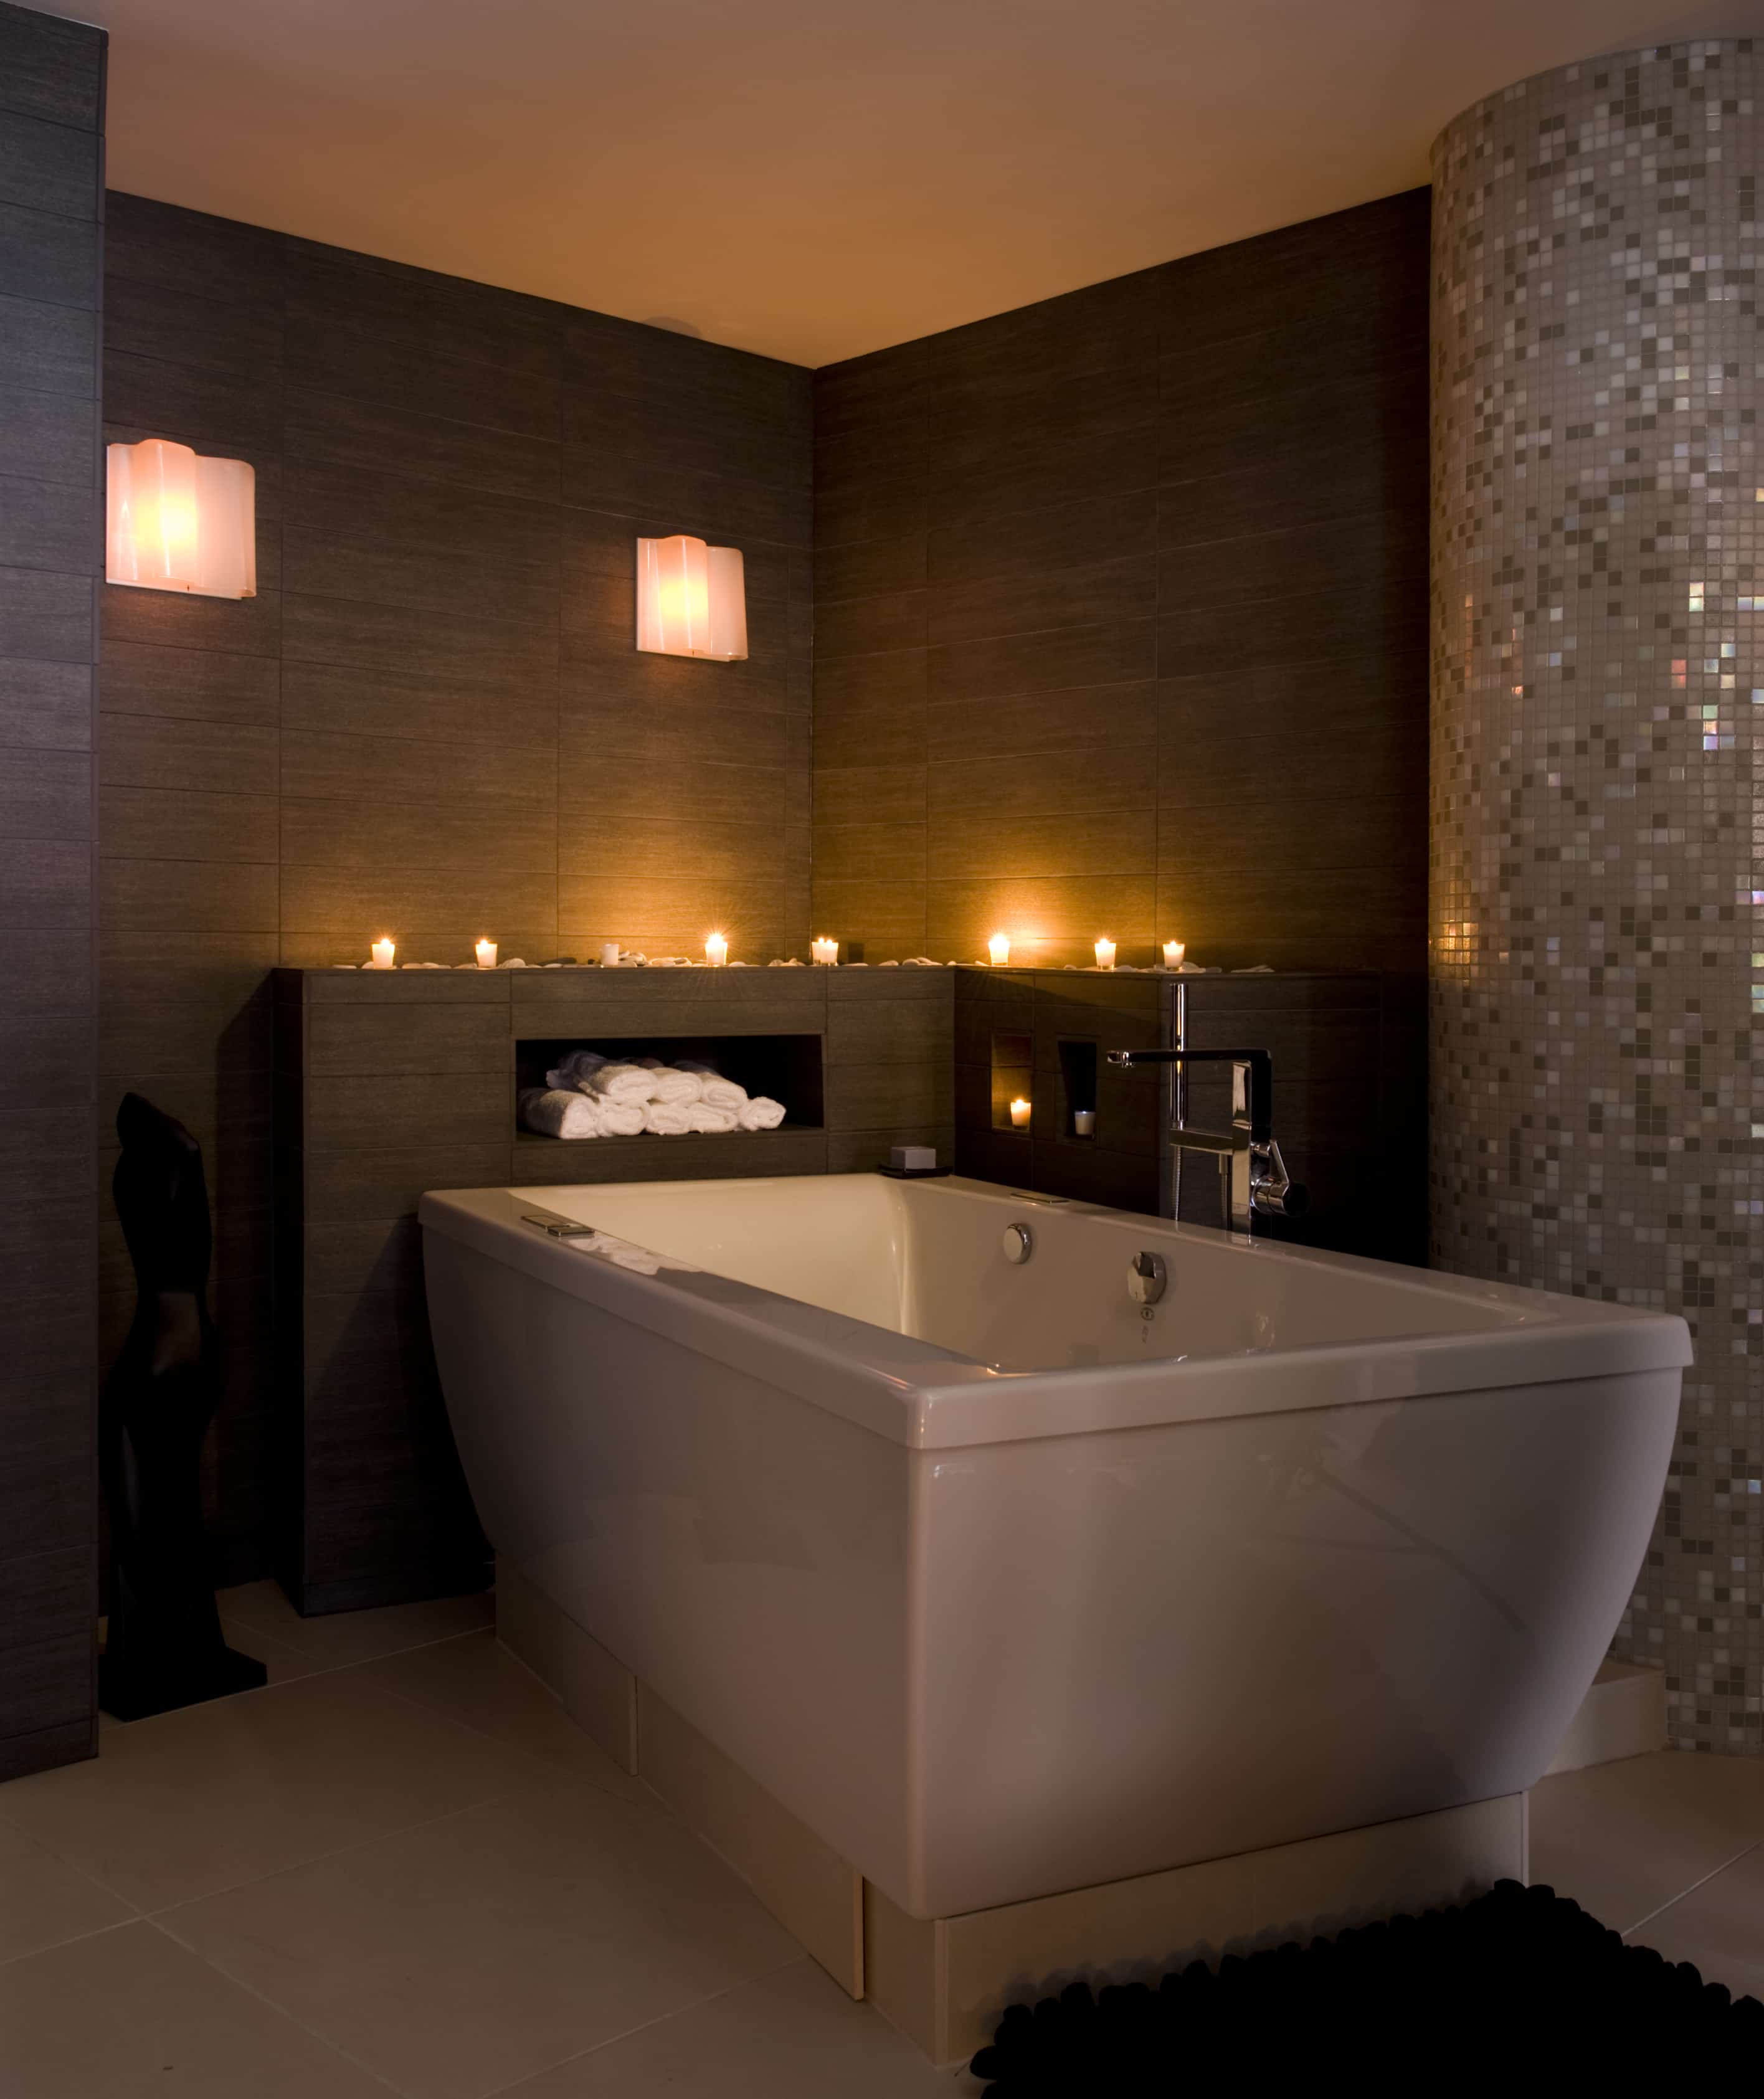 spa inspired bathroom with lighting